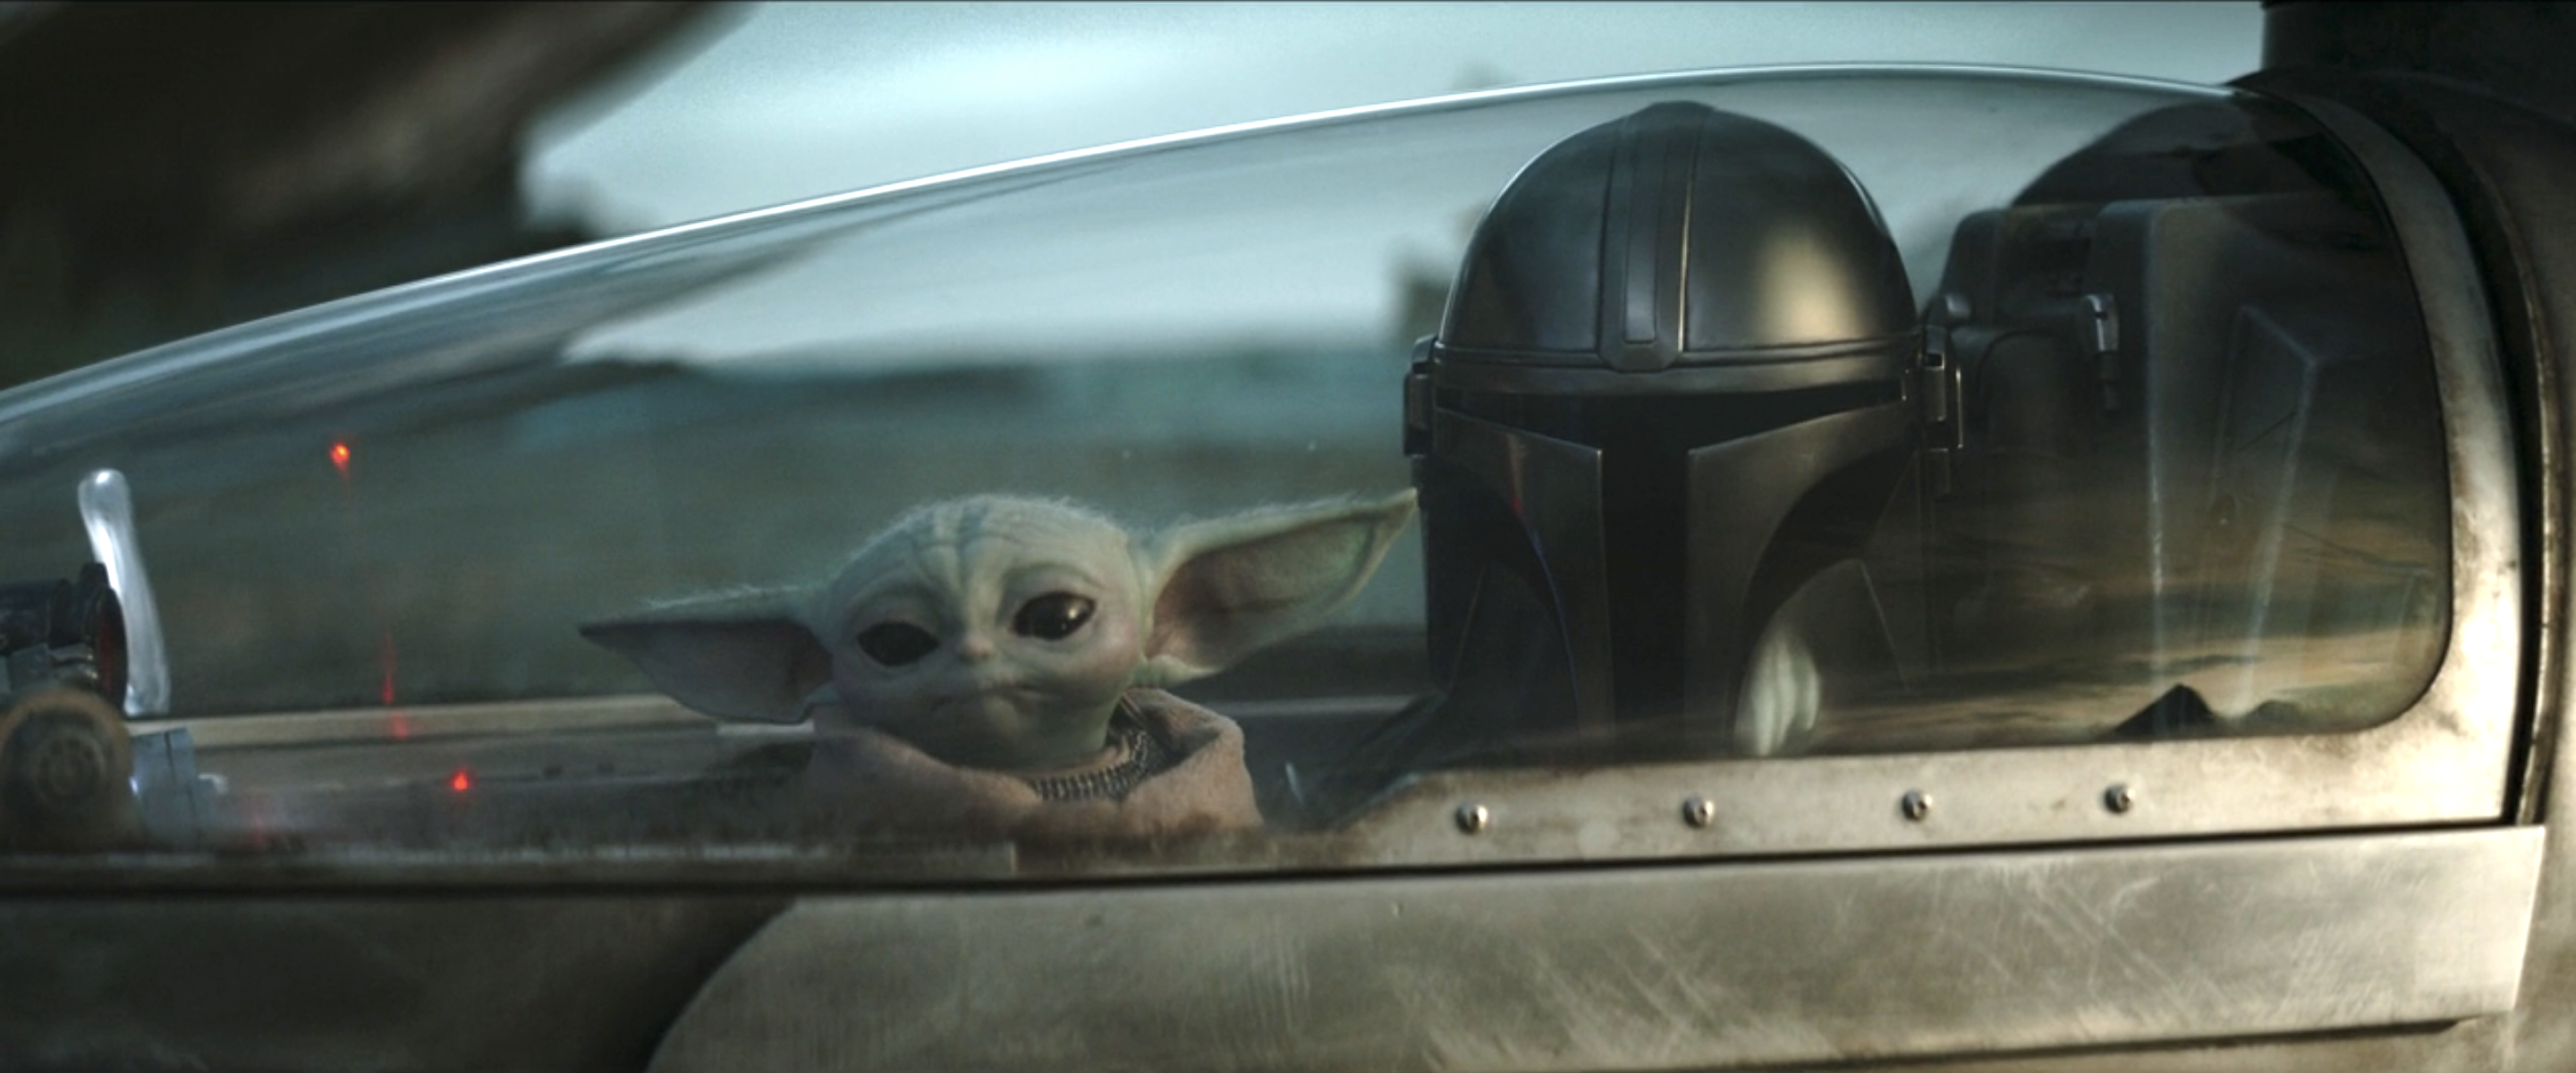 Star Wars' Jar Jar Binks Actor Thanks Fans After 'Mandalorian' Cameo